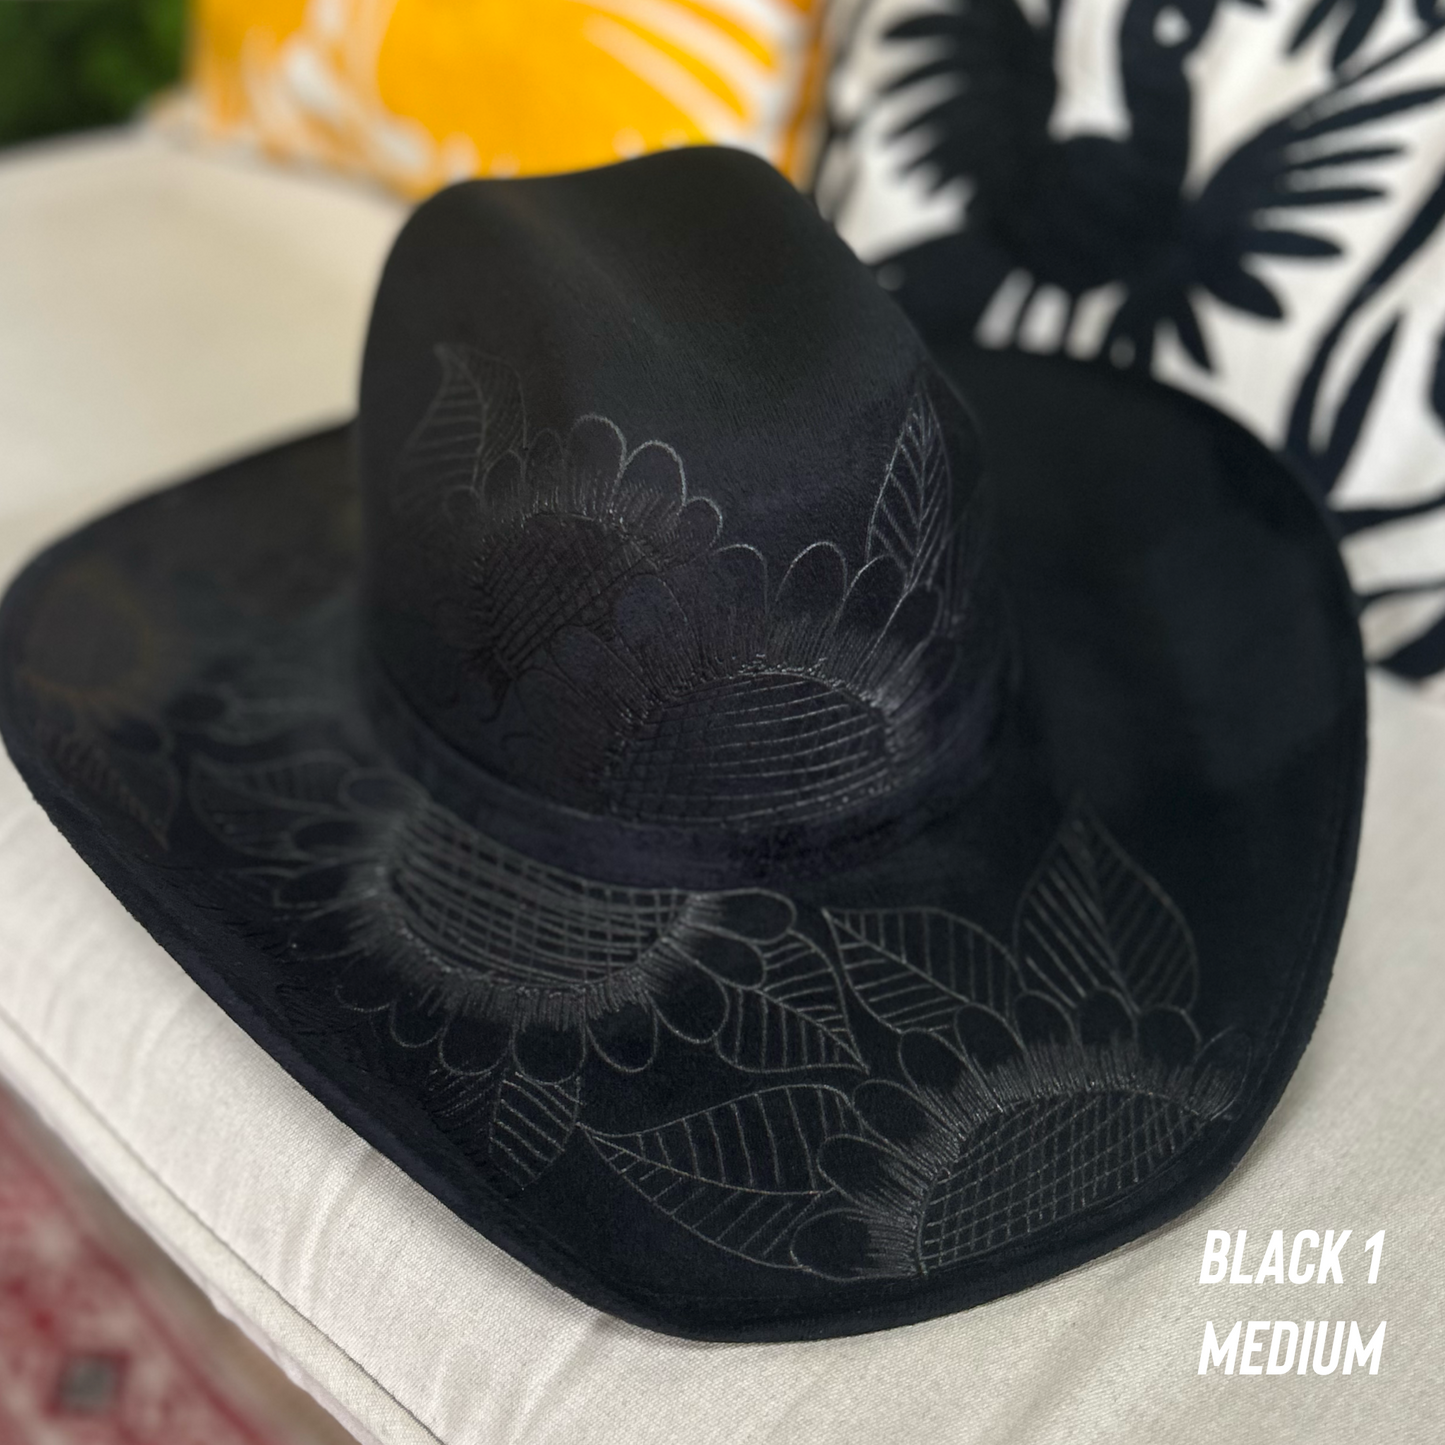 Engraved Floral Cowboy Hat